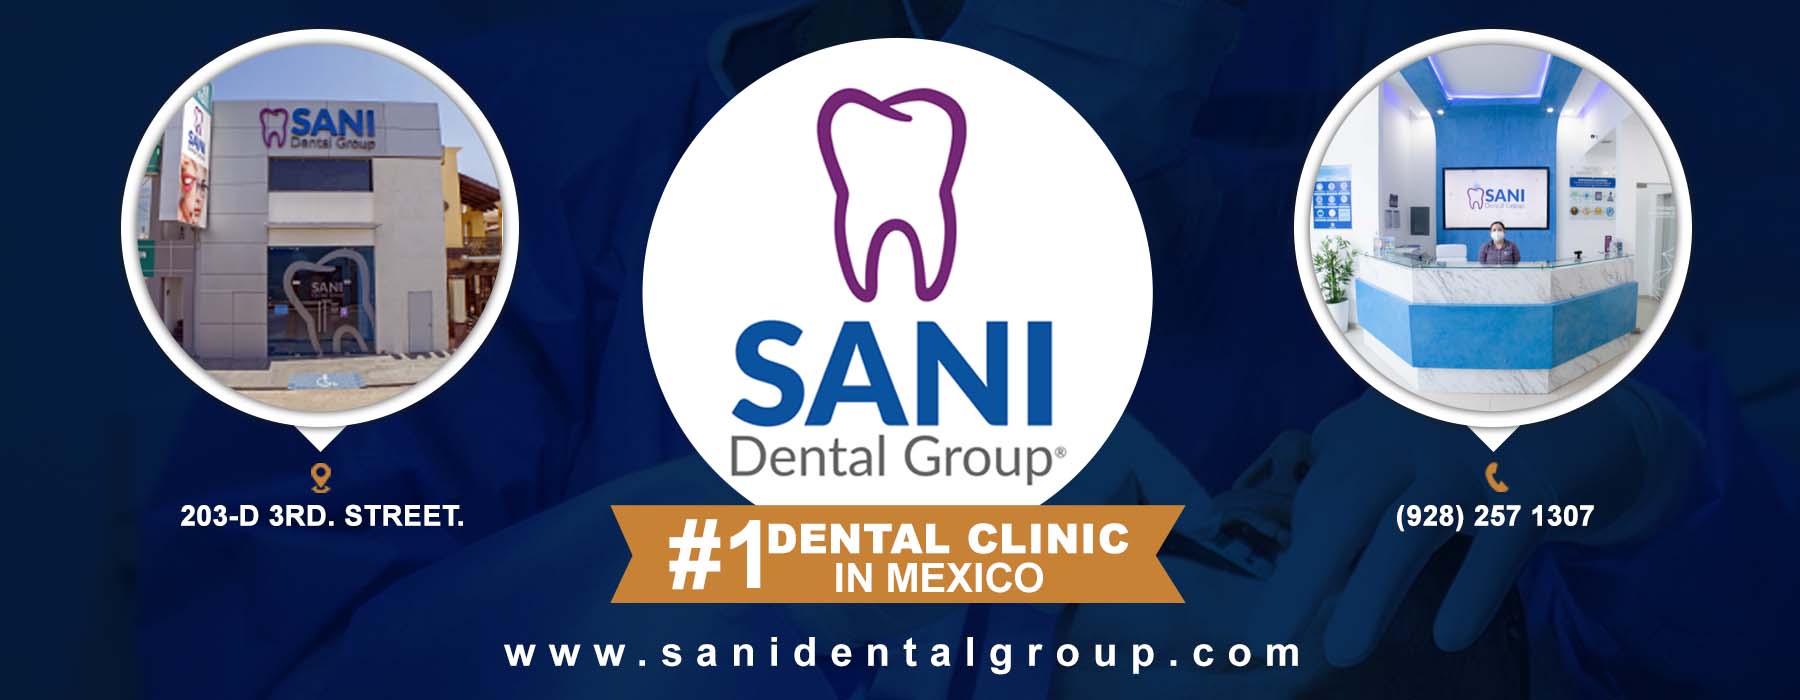  Sani Dental Group